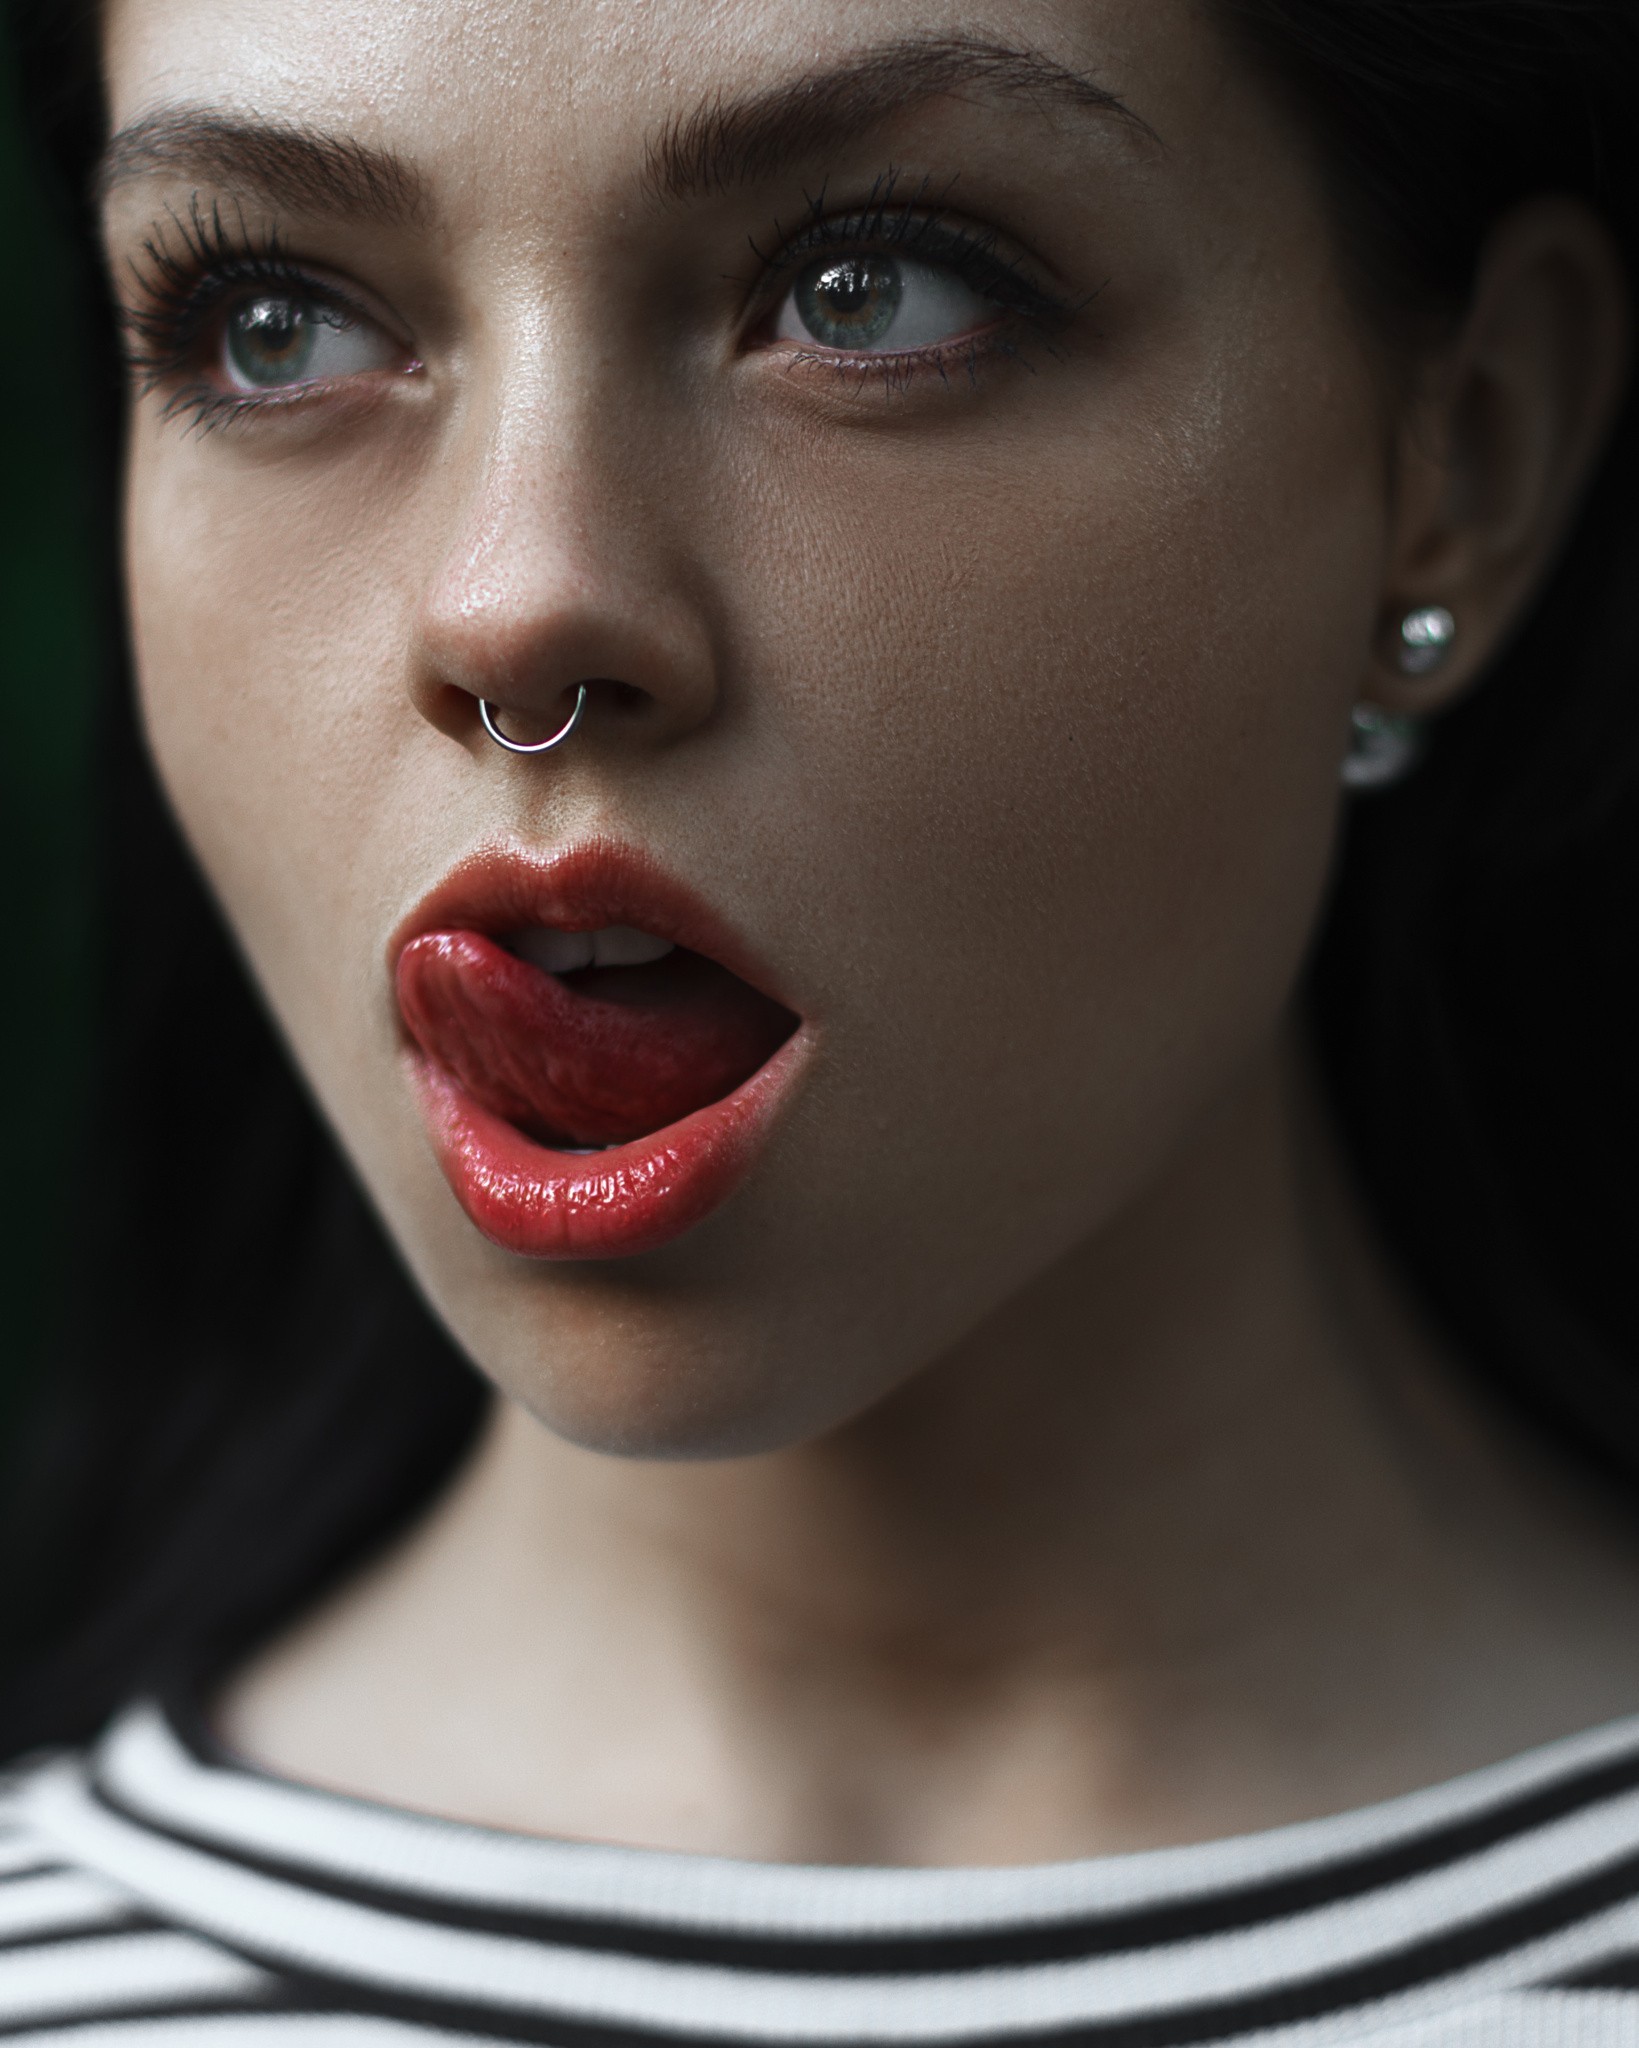 Nose Rings Licking Lips Face Women Pierced Septum 1639x2048